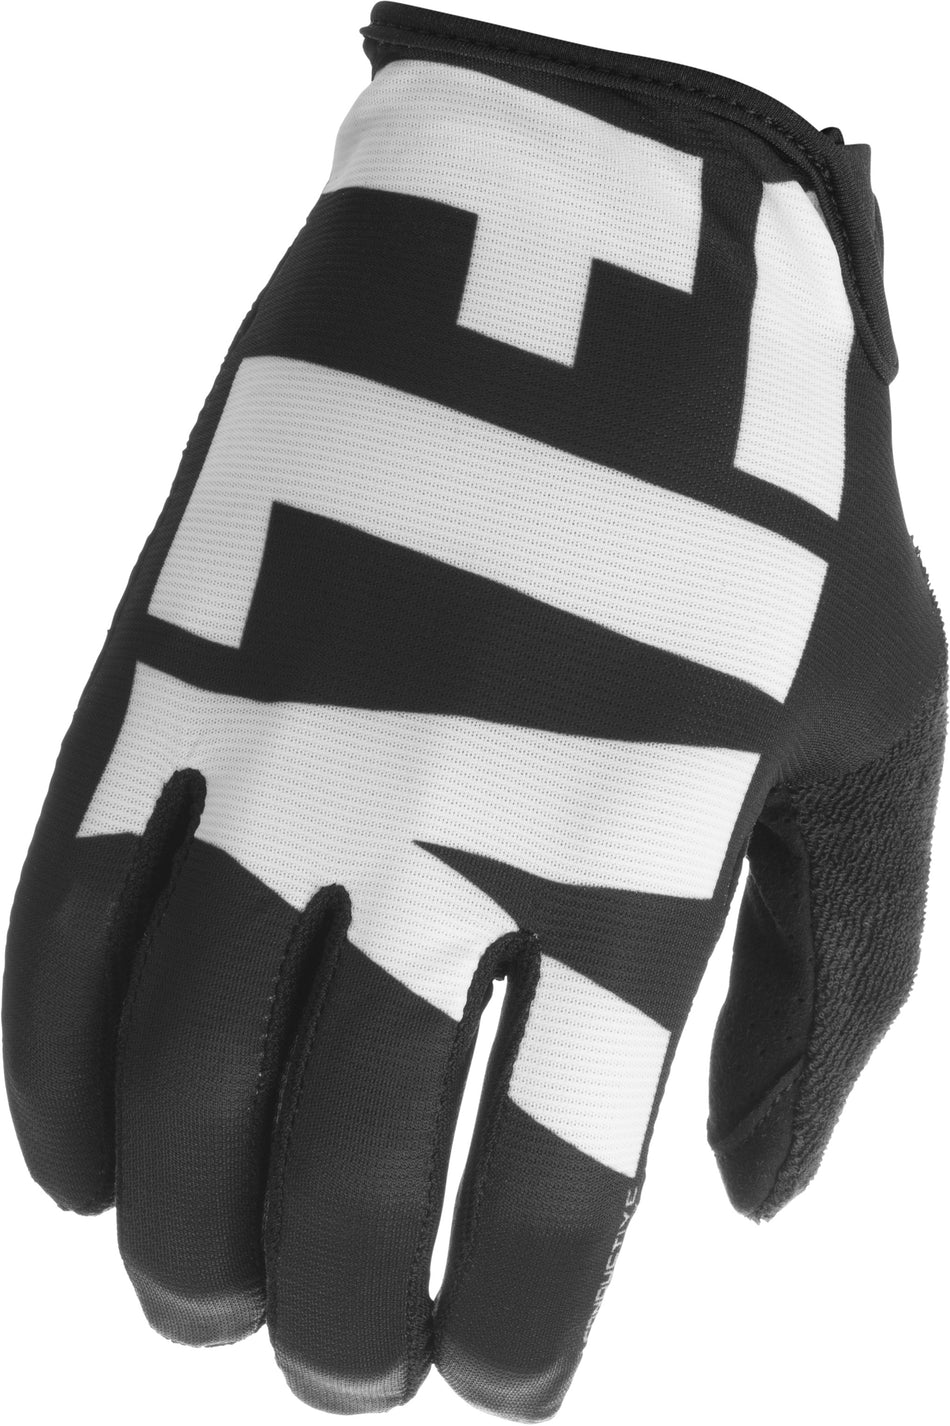 FLY RACING Media Gloves Black/White Sz 11 350-10411